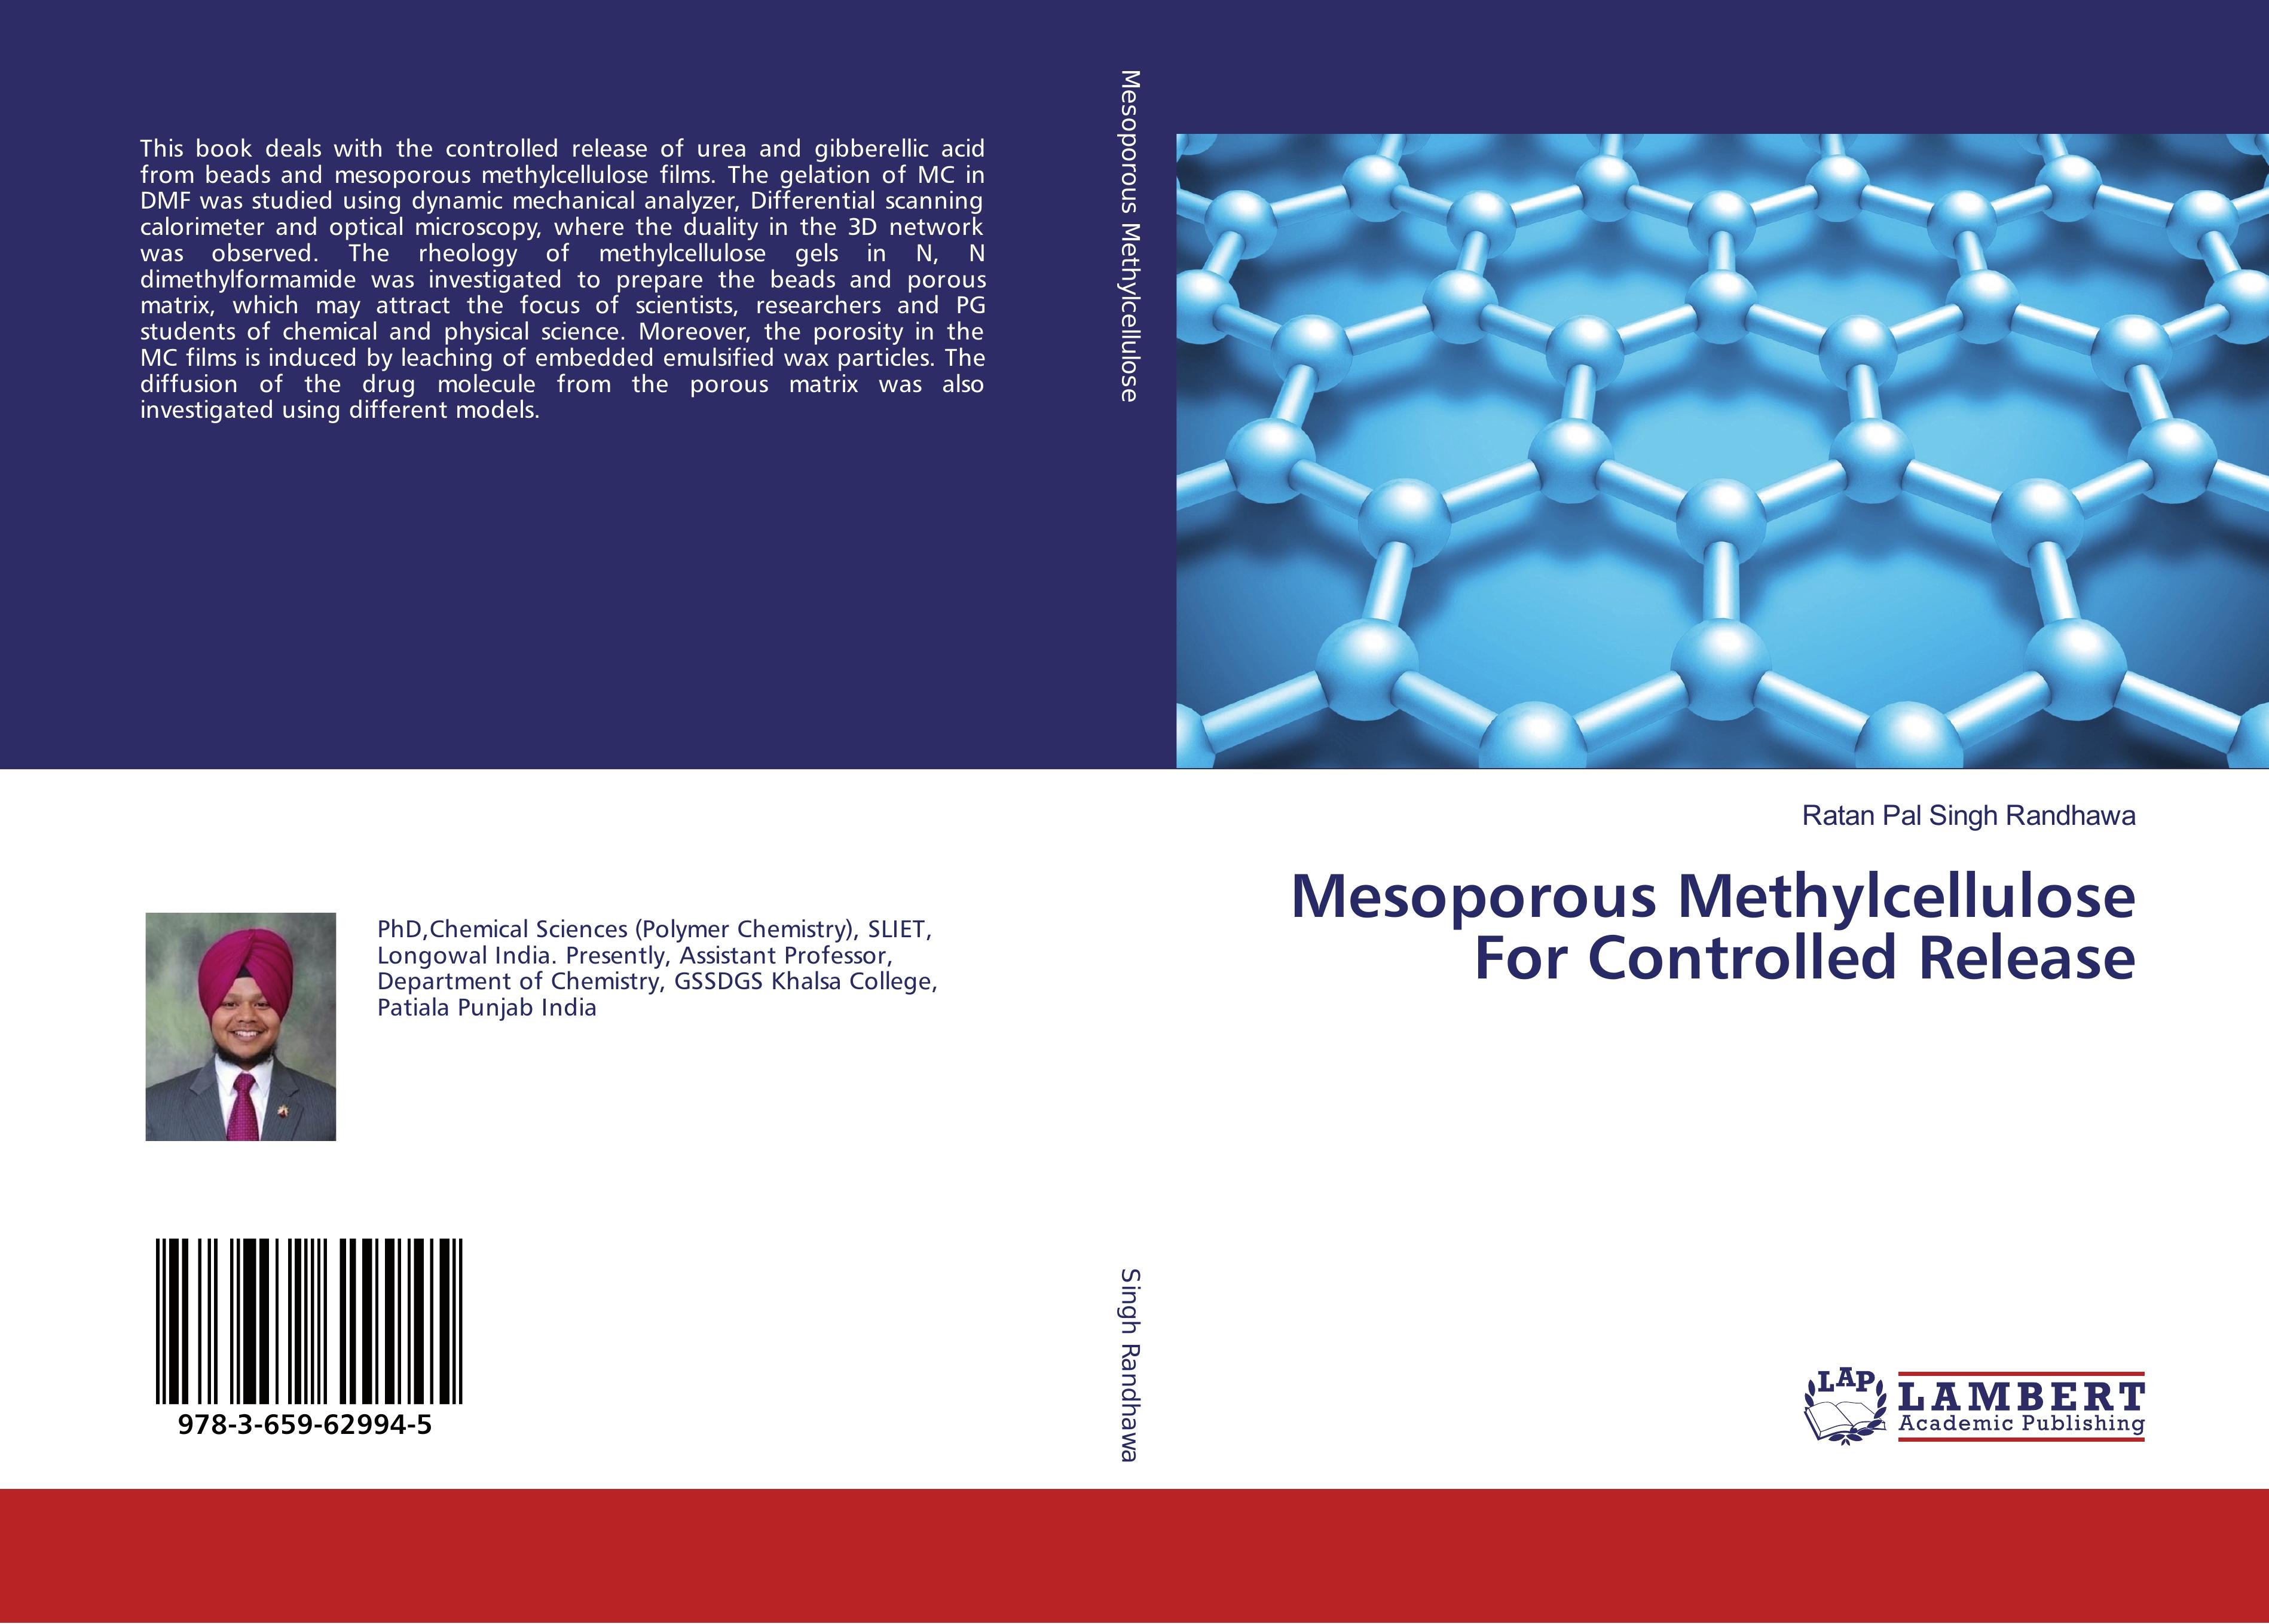 Mesoporous Methylcellulose For Controlled Release - Singh Randhawa, Ratan Pal